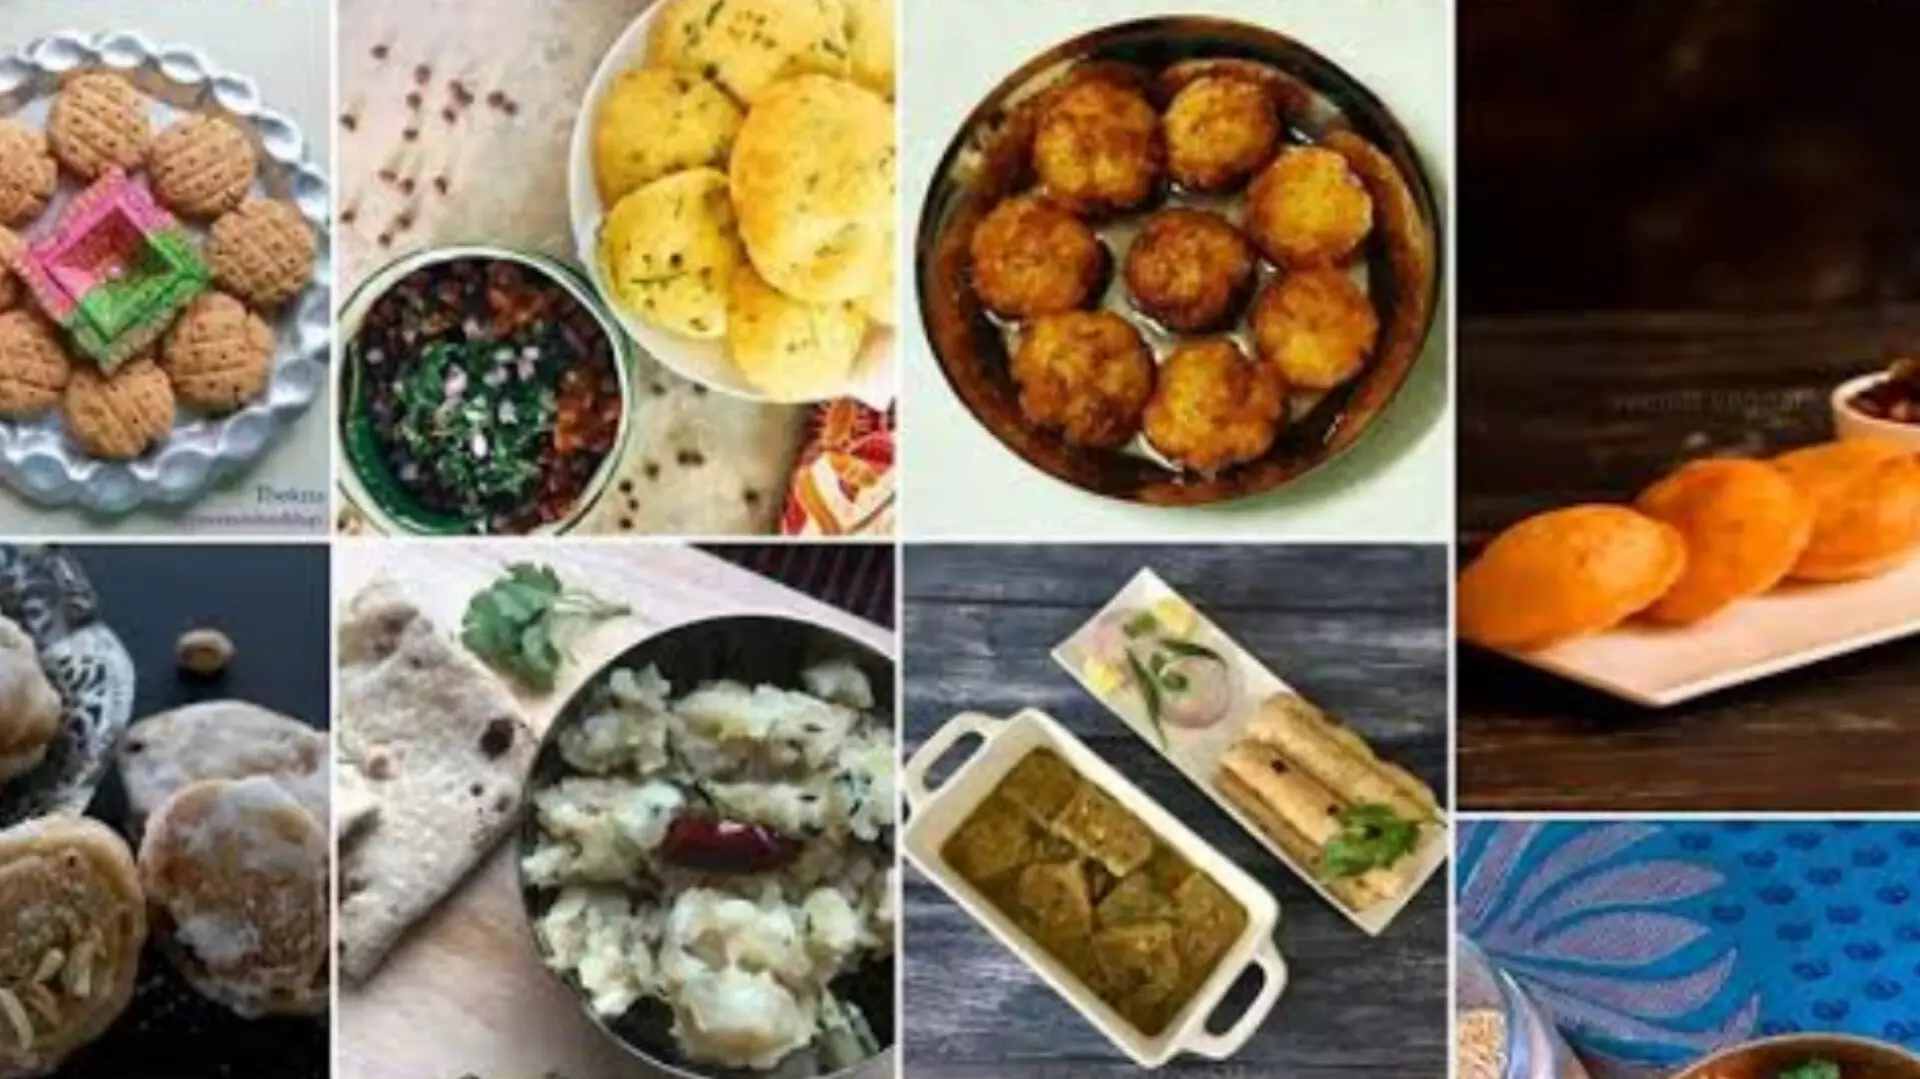 Uttar Pradesh Famous Food Items